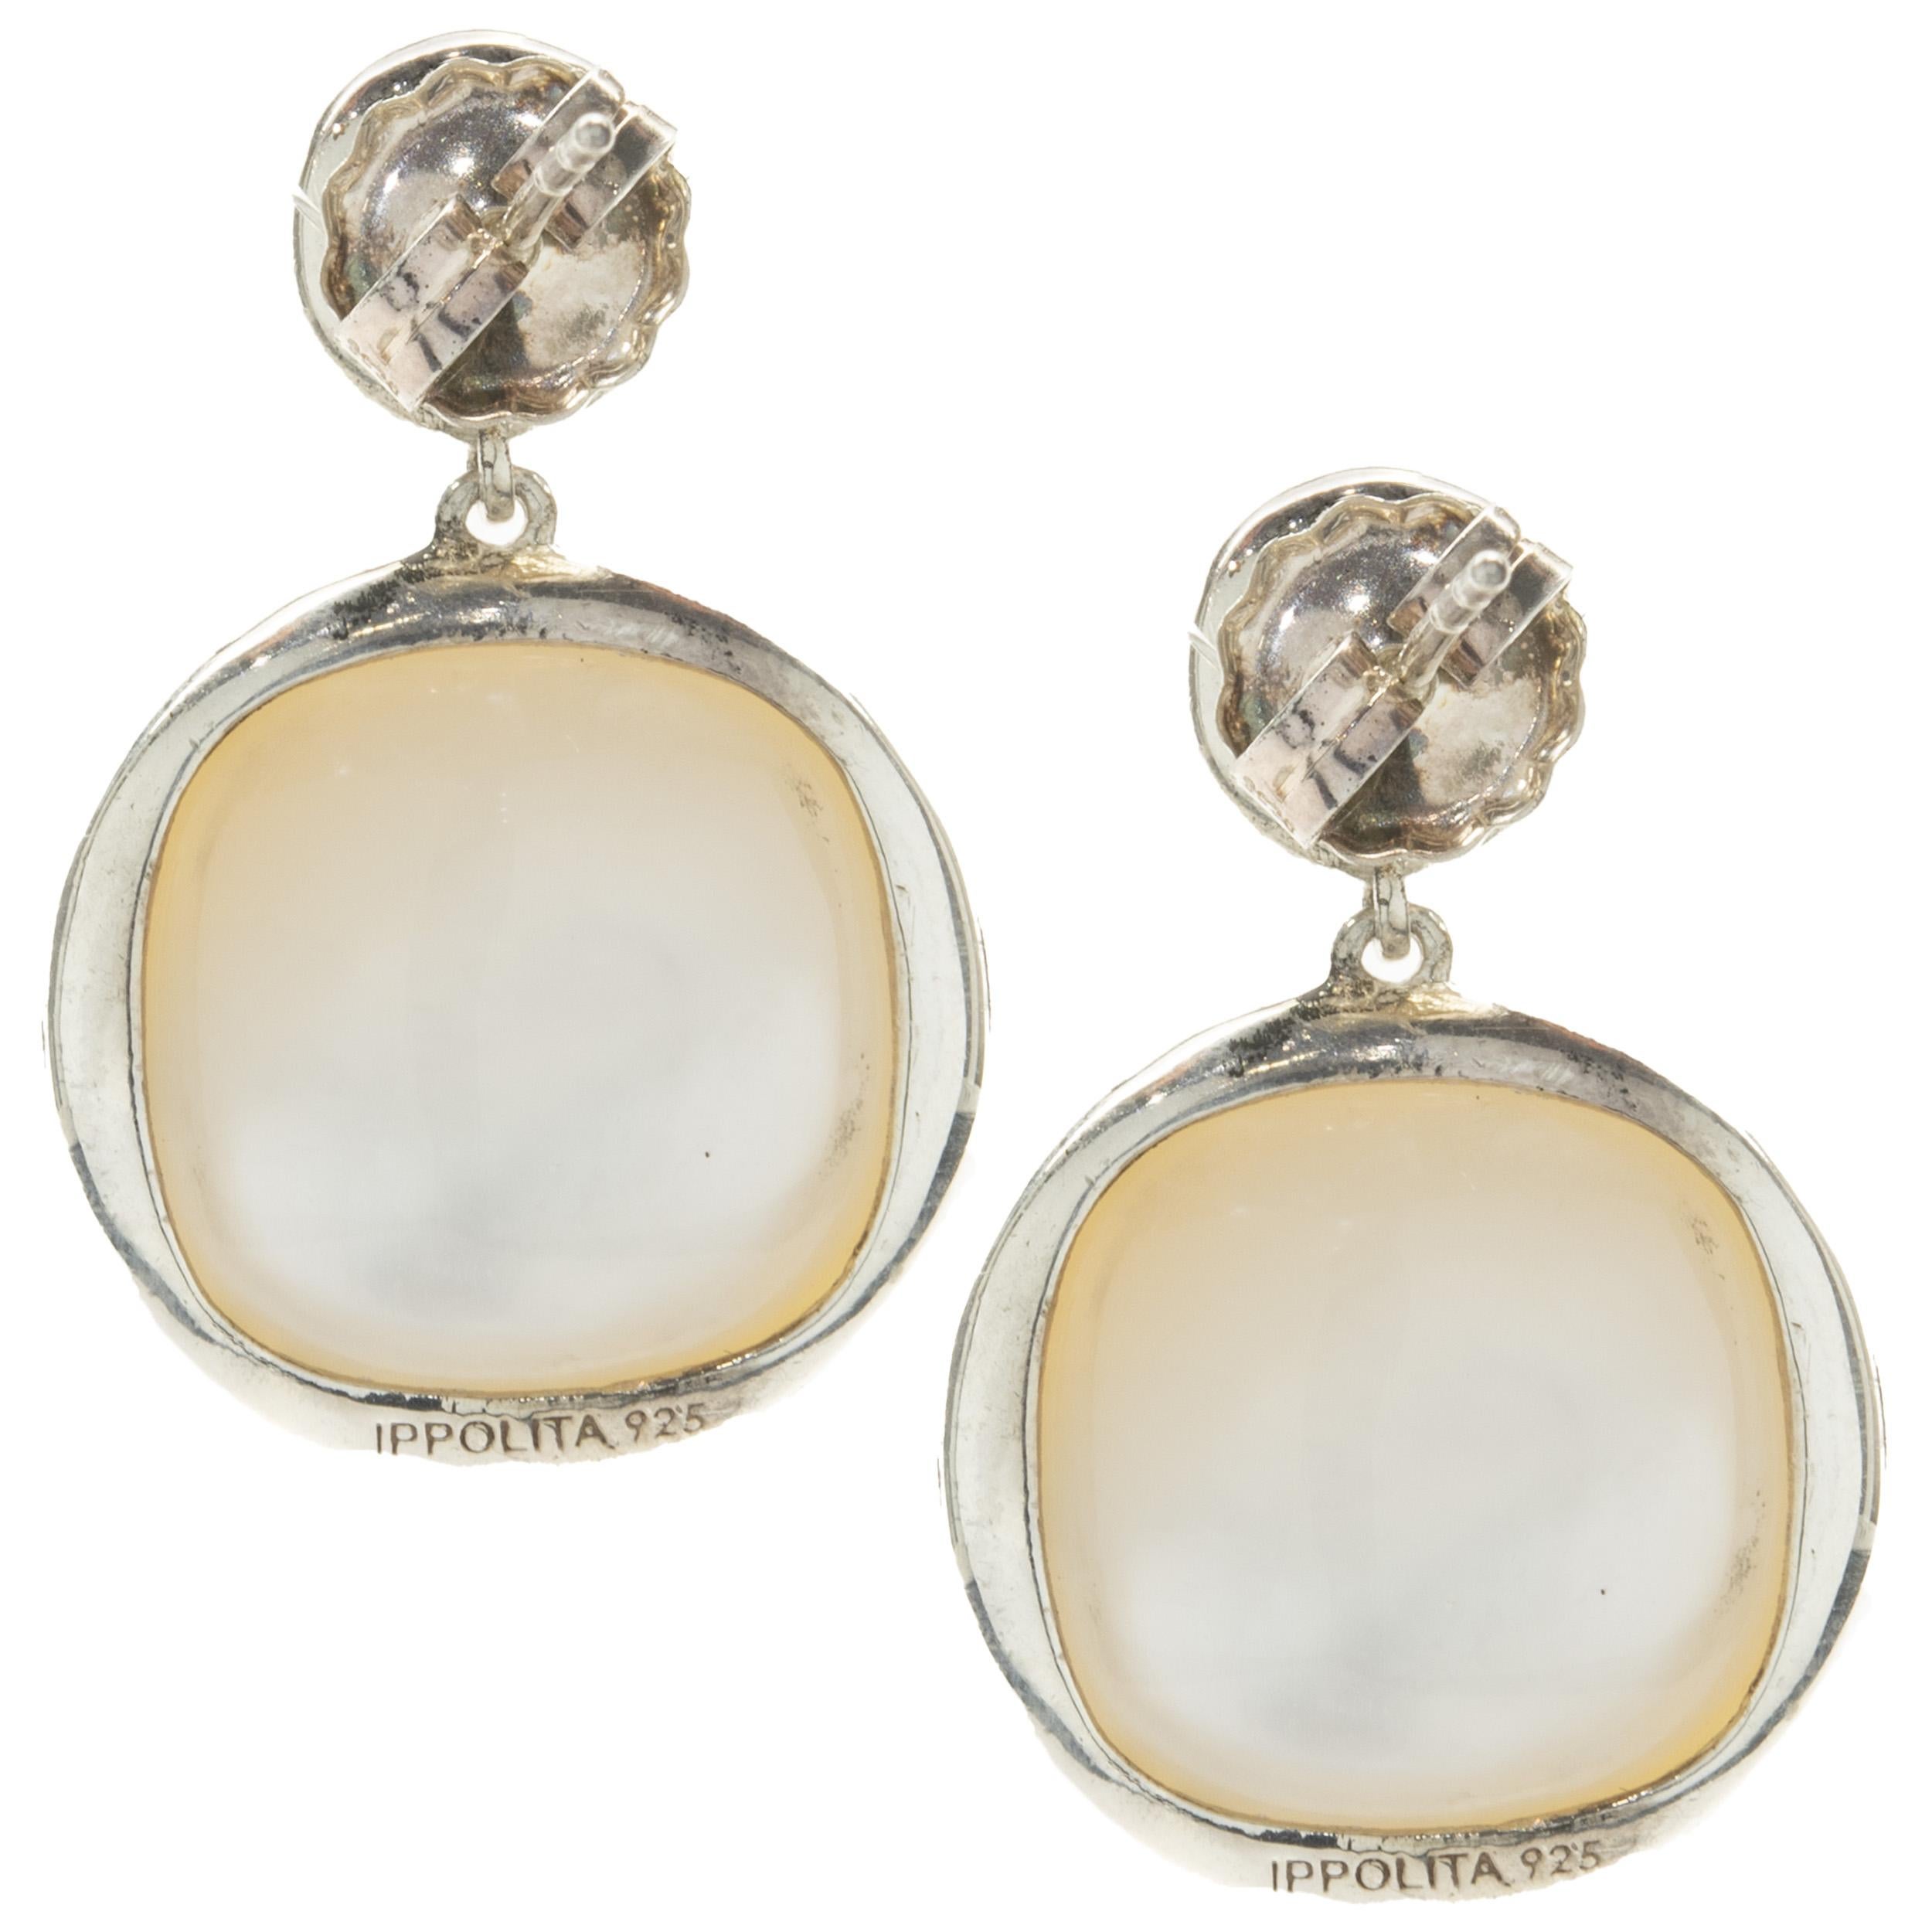 Designer: Ippolita
Material: sterling silver
Weight: 7.35 grams
Dimensions: earrings measure 26.25mm long